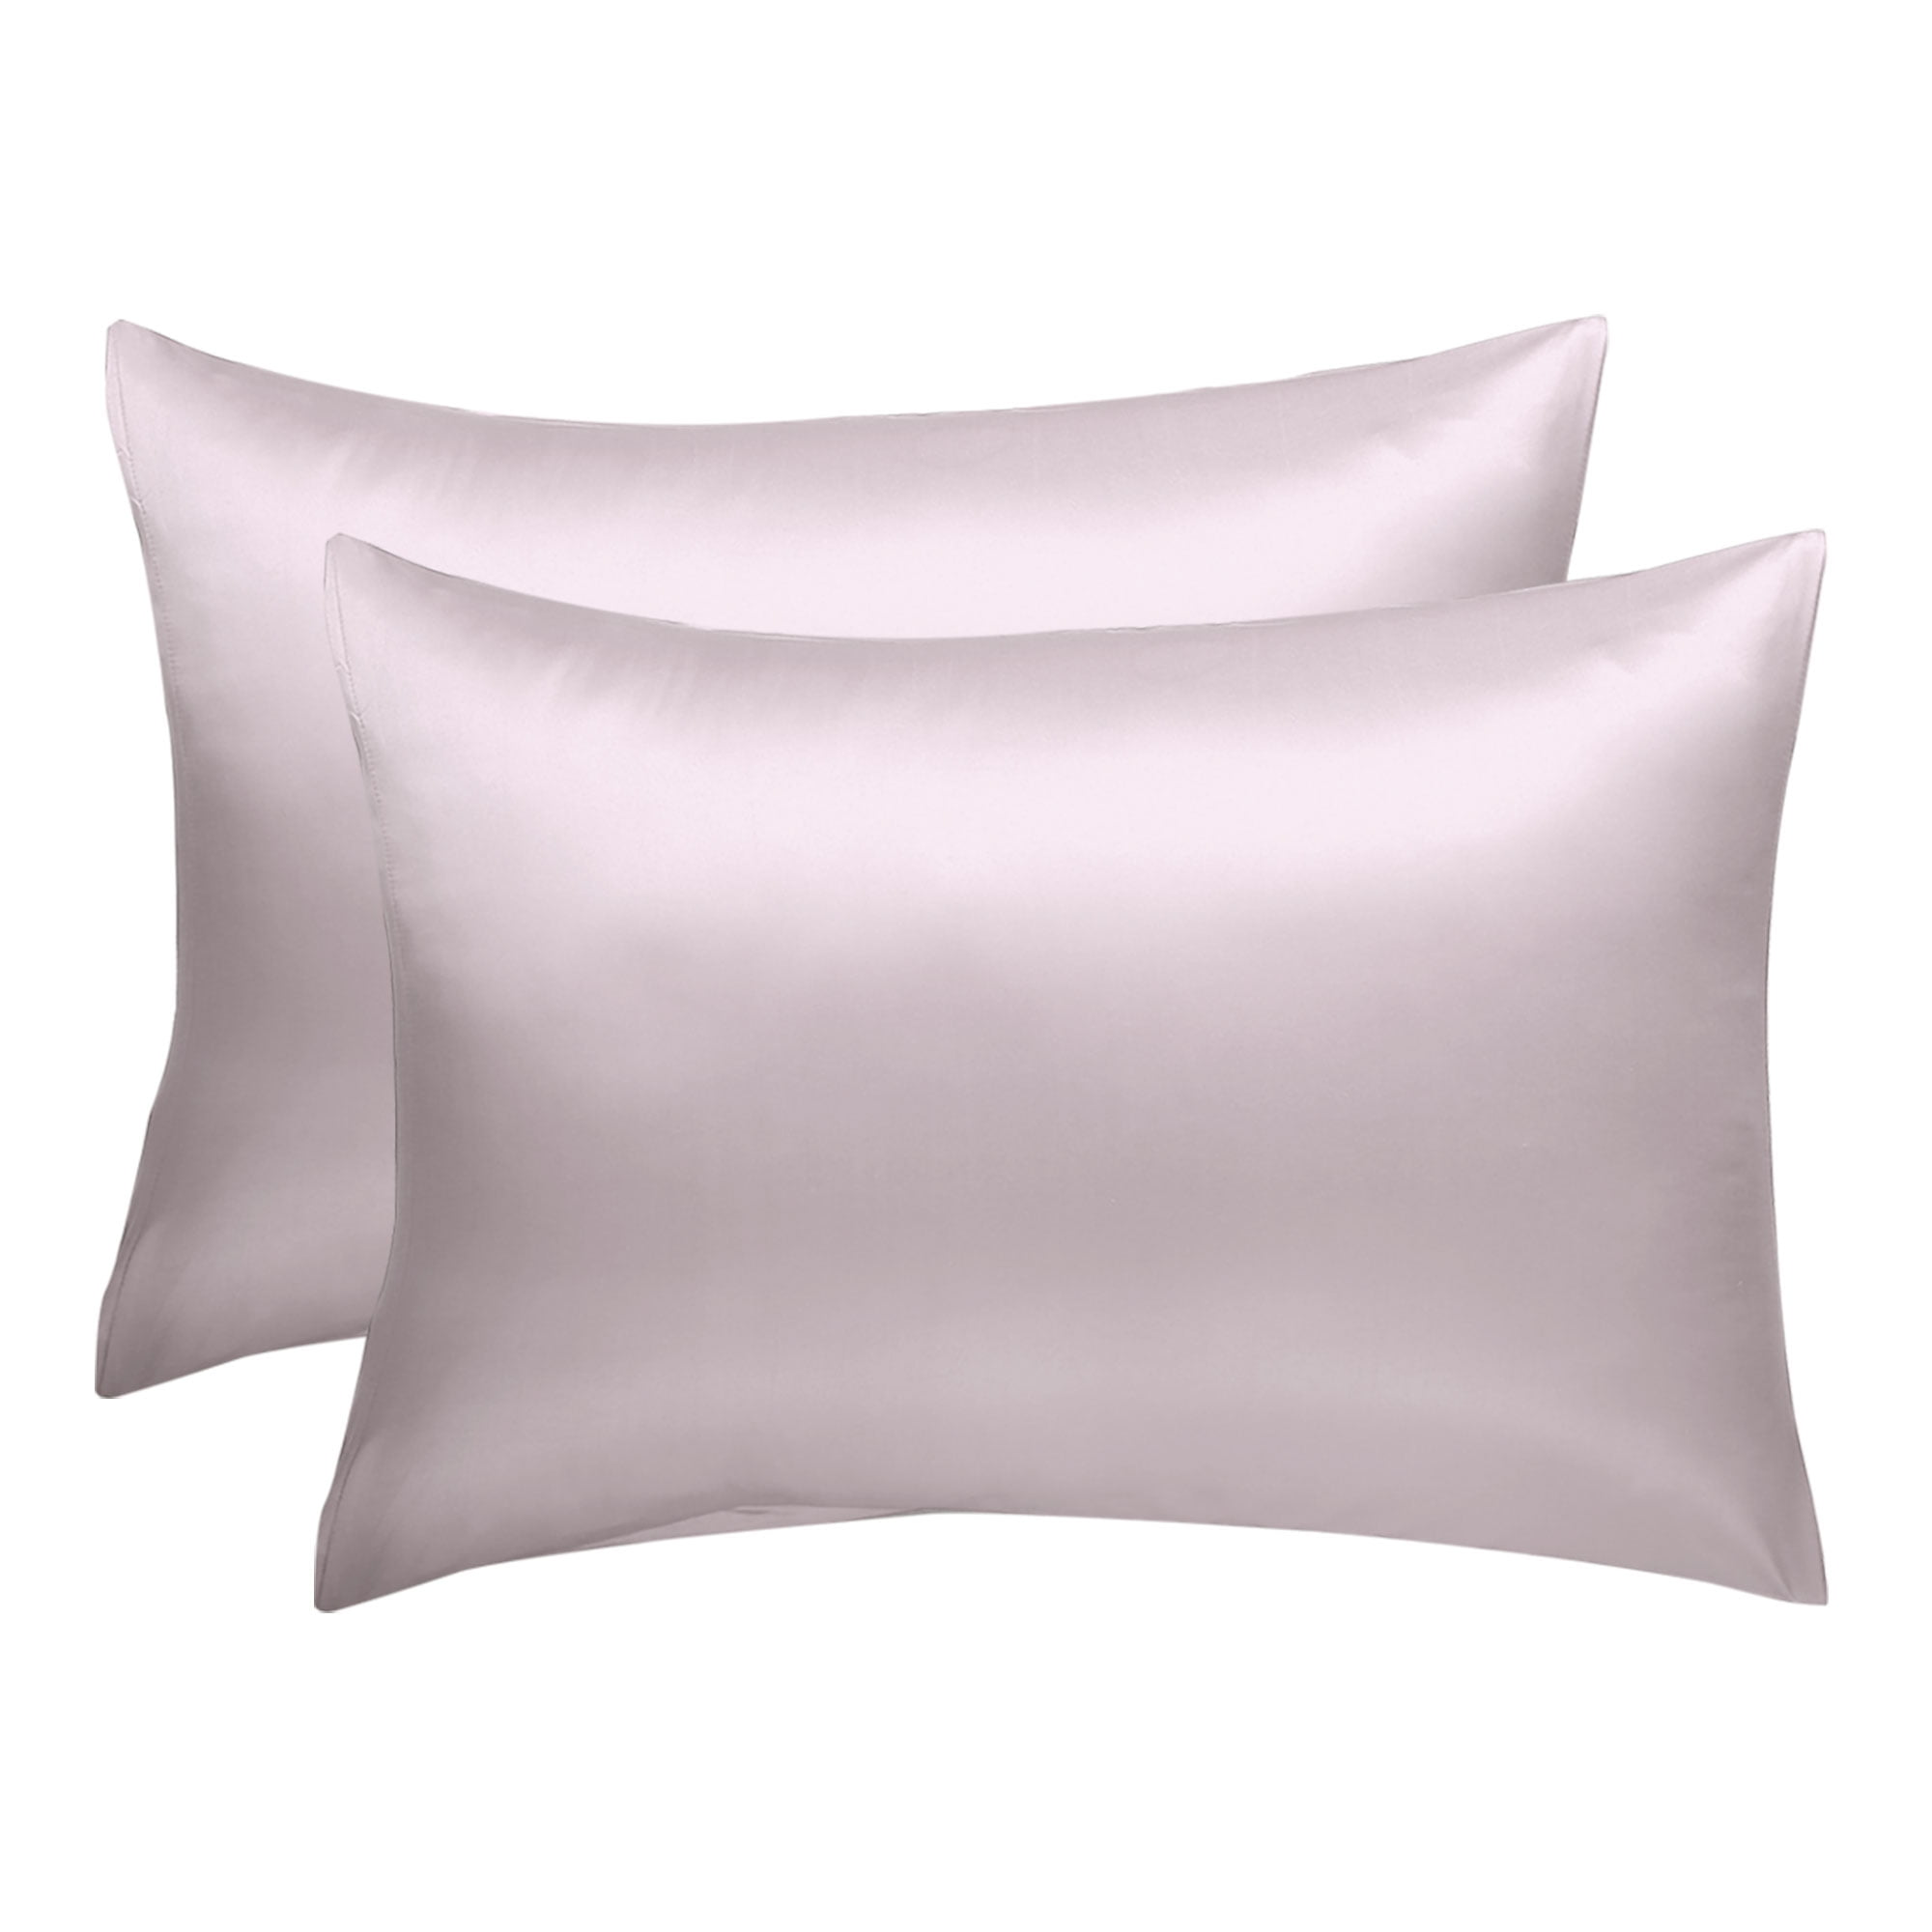 Set Of 2 Luxury Satin Pillowcase Cool Silky Queen Size Pillow Slip Case Cover Silver